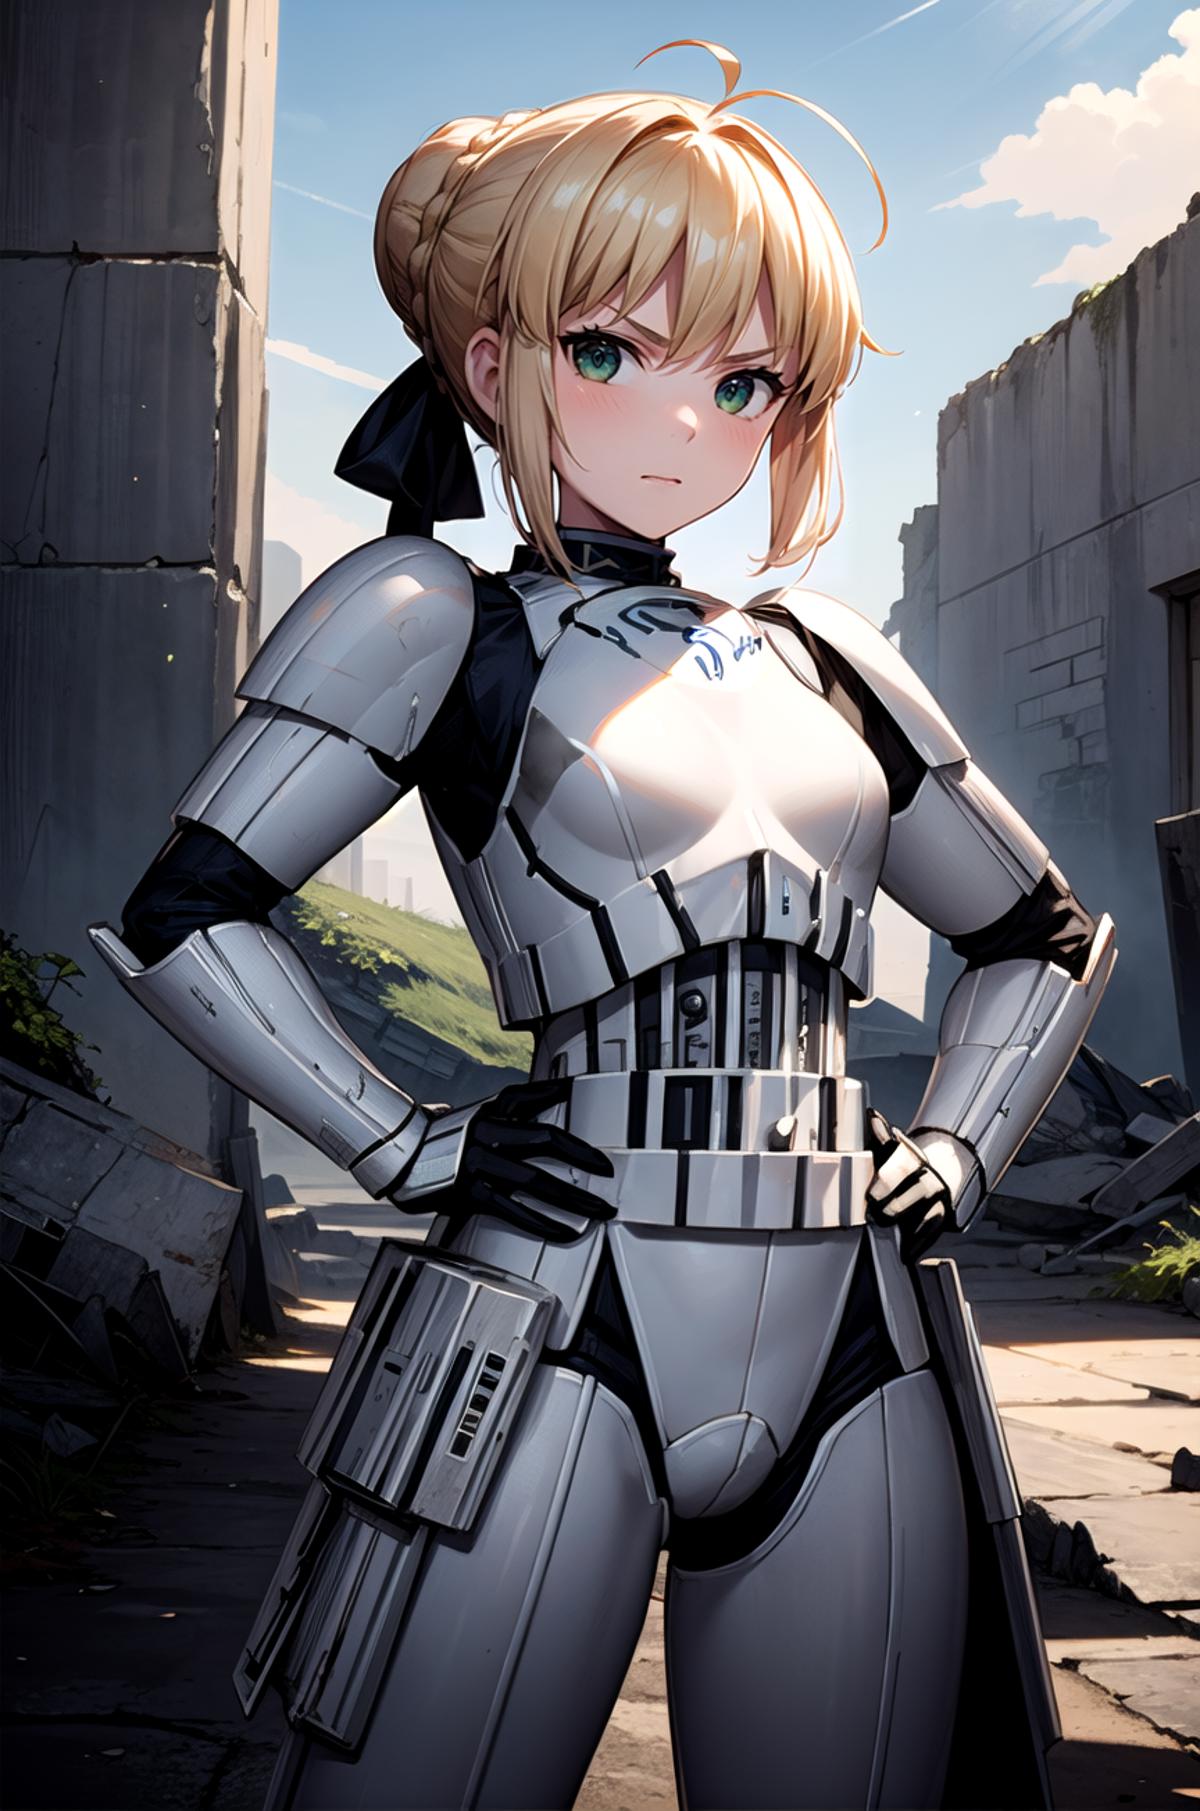 Stormtrooper Armor | Star Wars image by Deto15